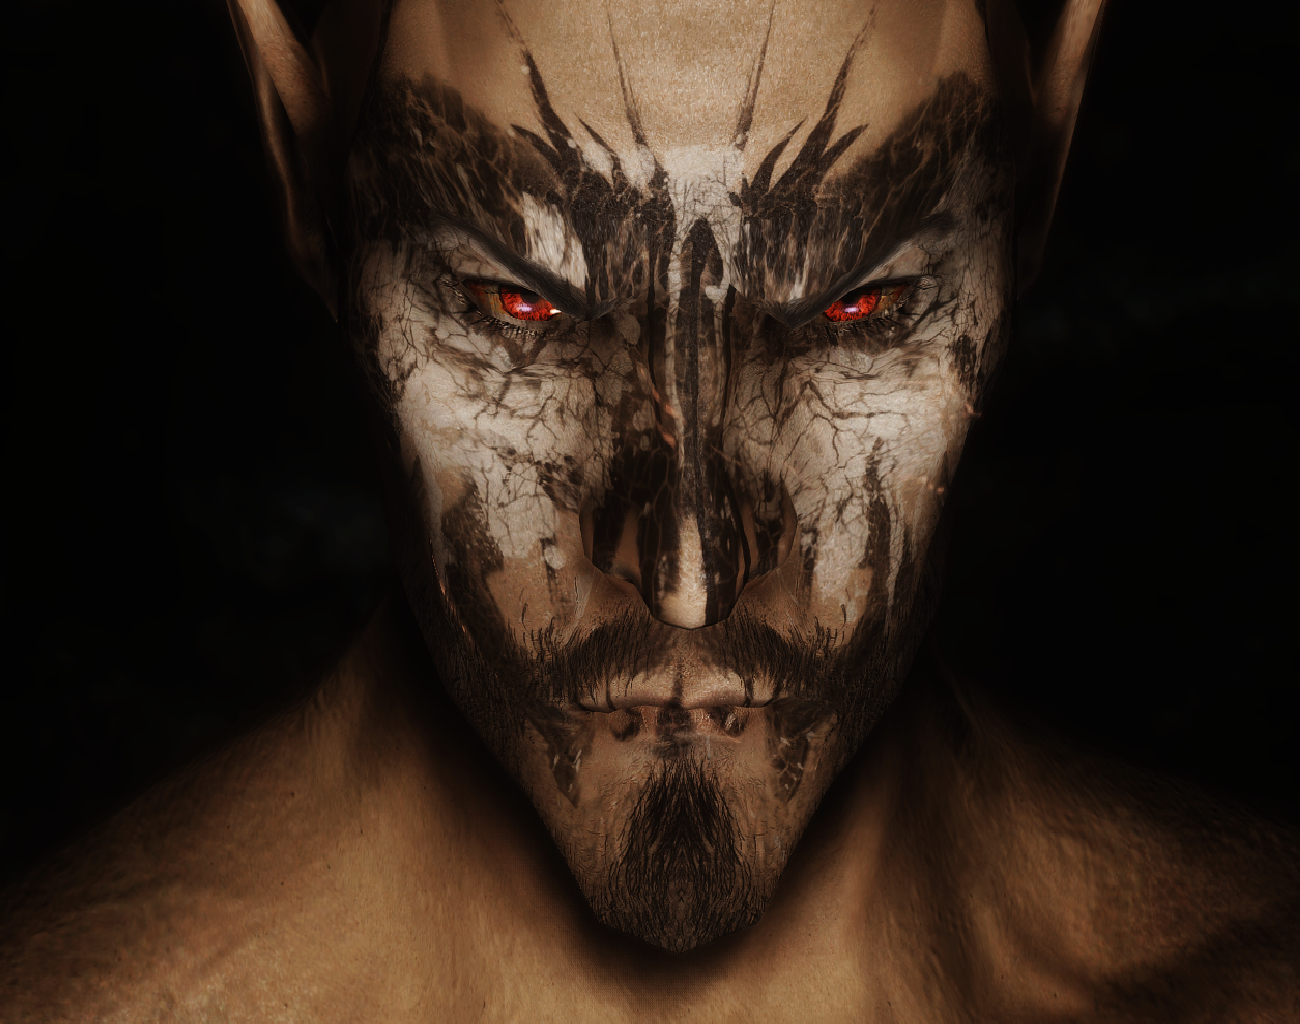 General 1300x1024 The Elder Scrolls V: Skyrim elves face paint red eyes RPG video games fantasy men face PC gaming